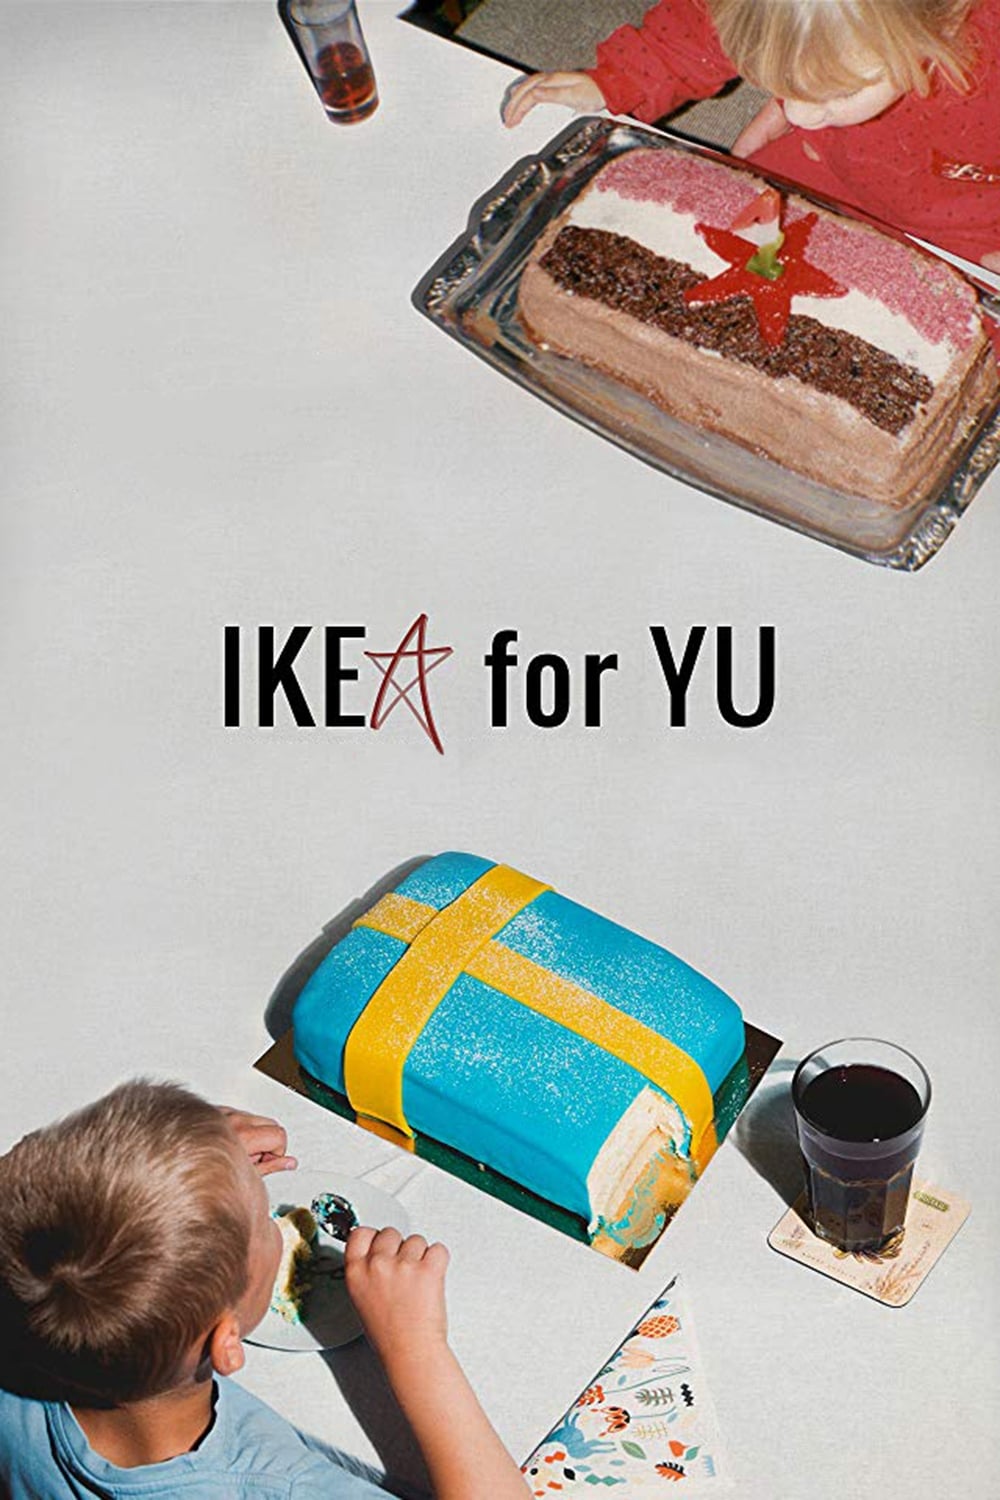 IKEA for YU